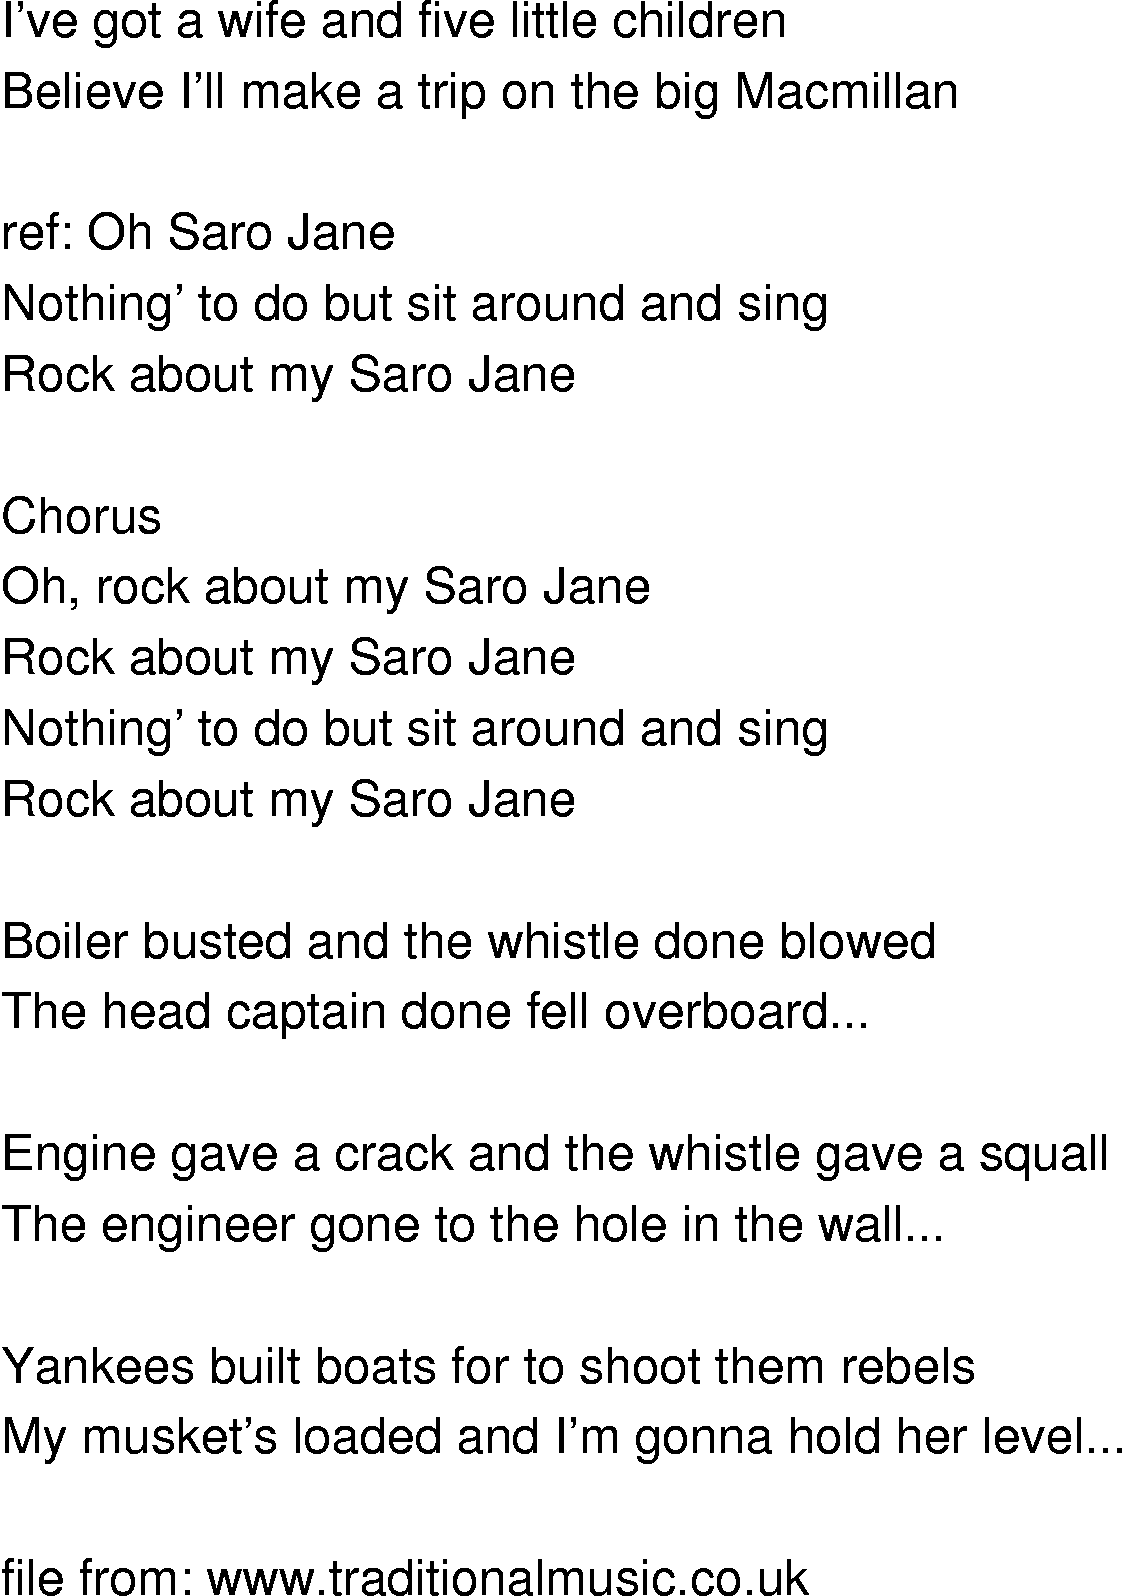 Old-Time (oldtimey) Song Lyrics - saro jane